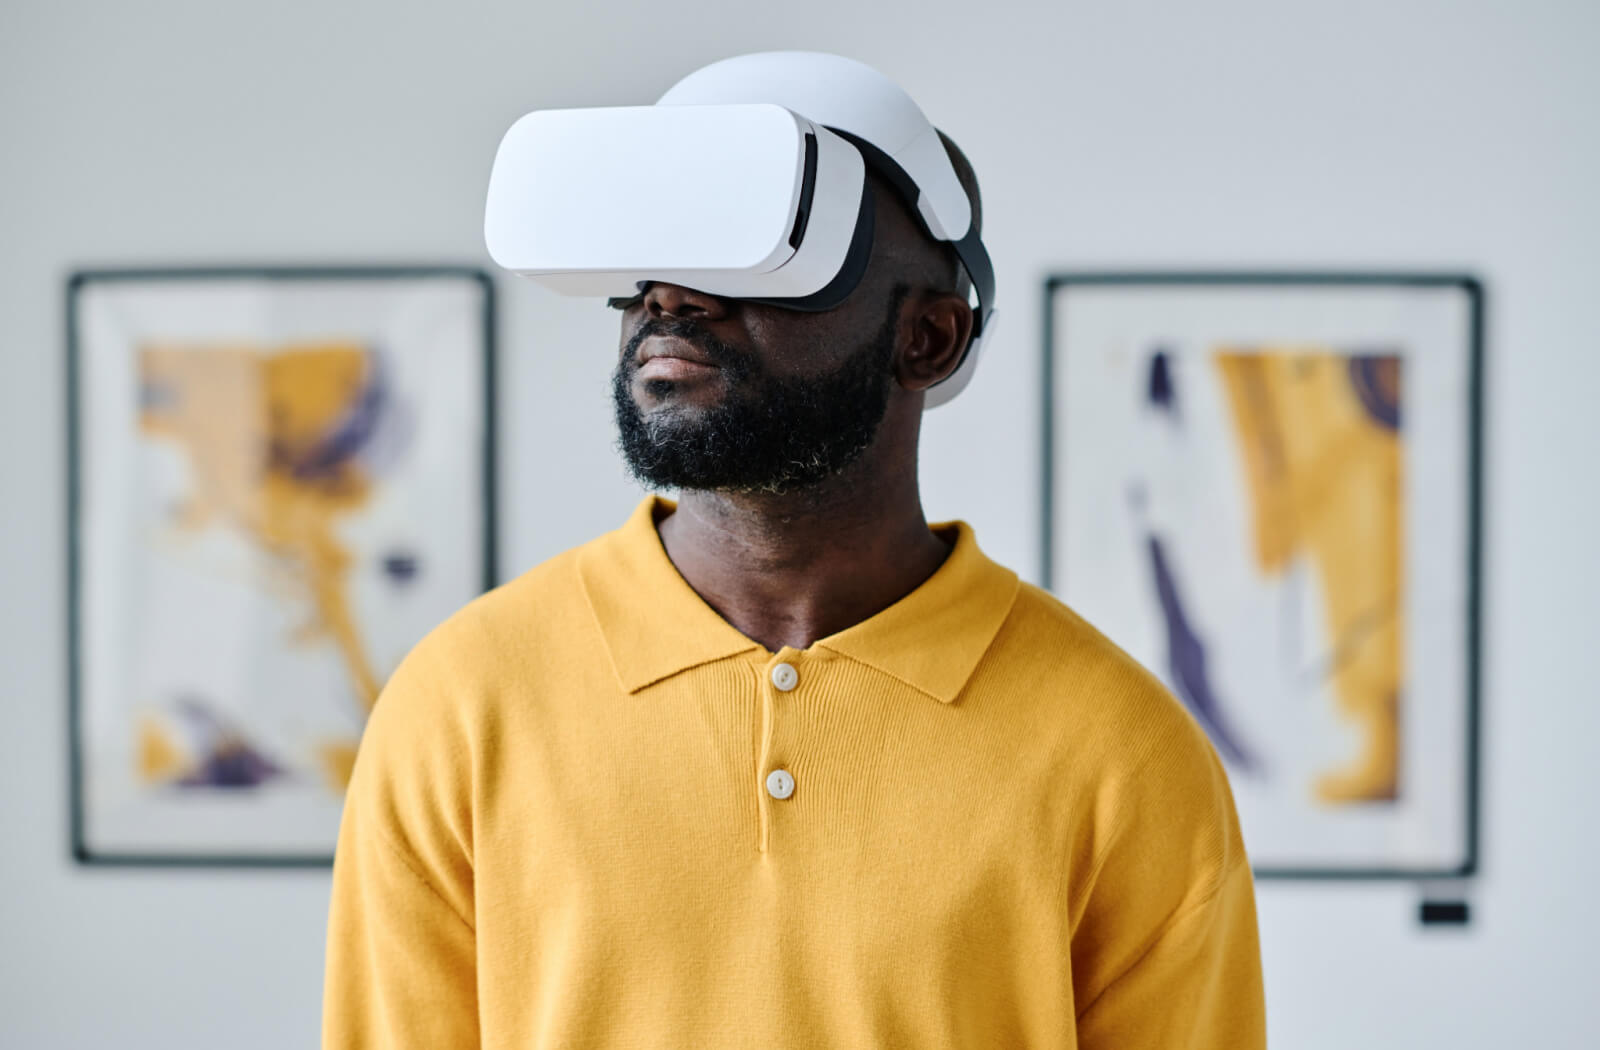 A man wearing a yellow shirt using a VR headset.